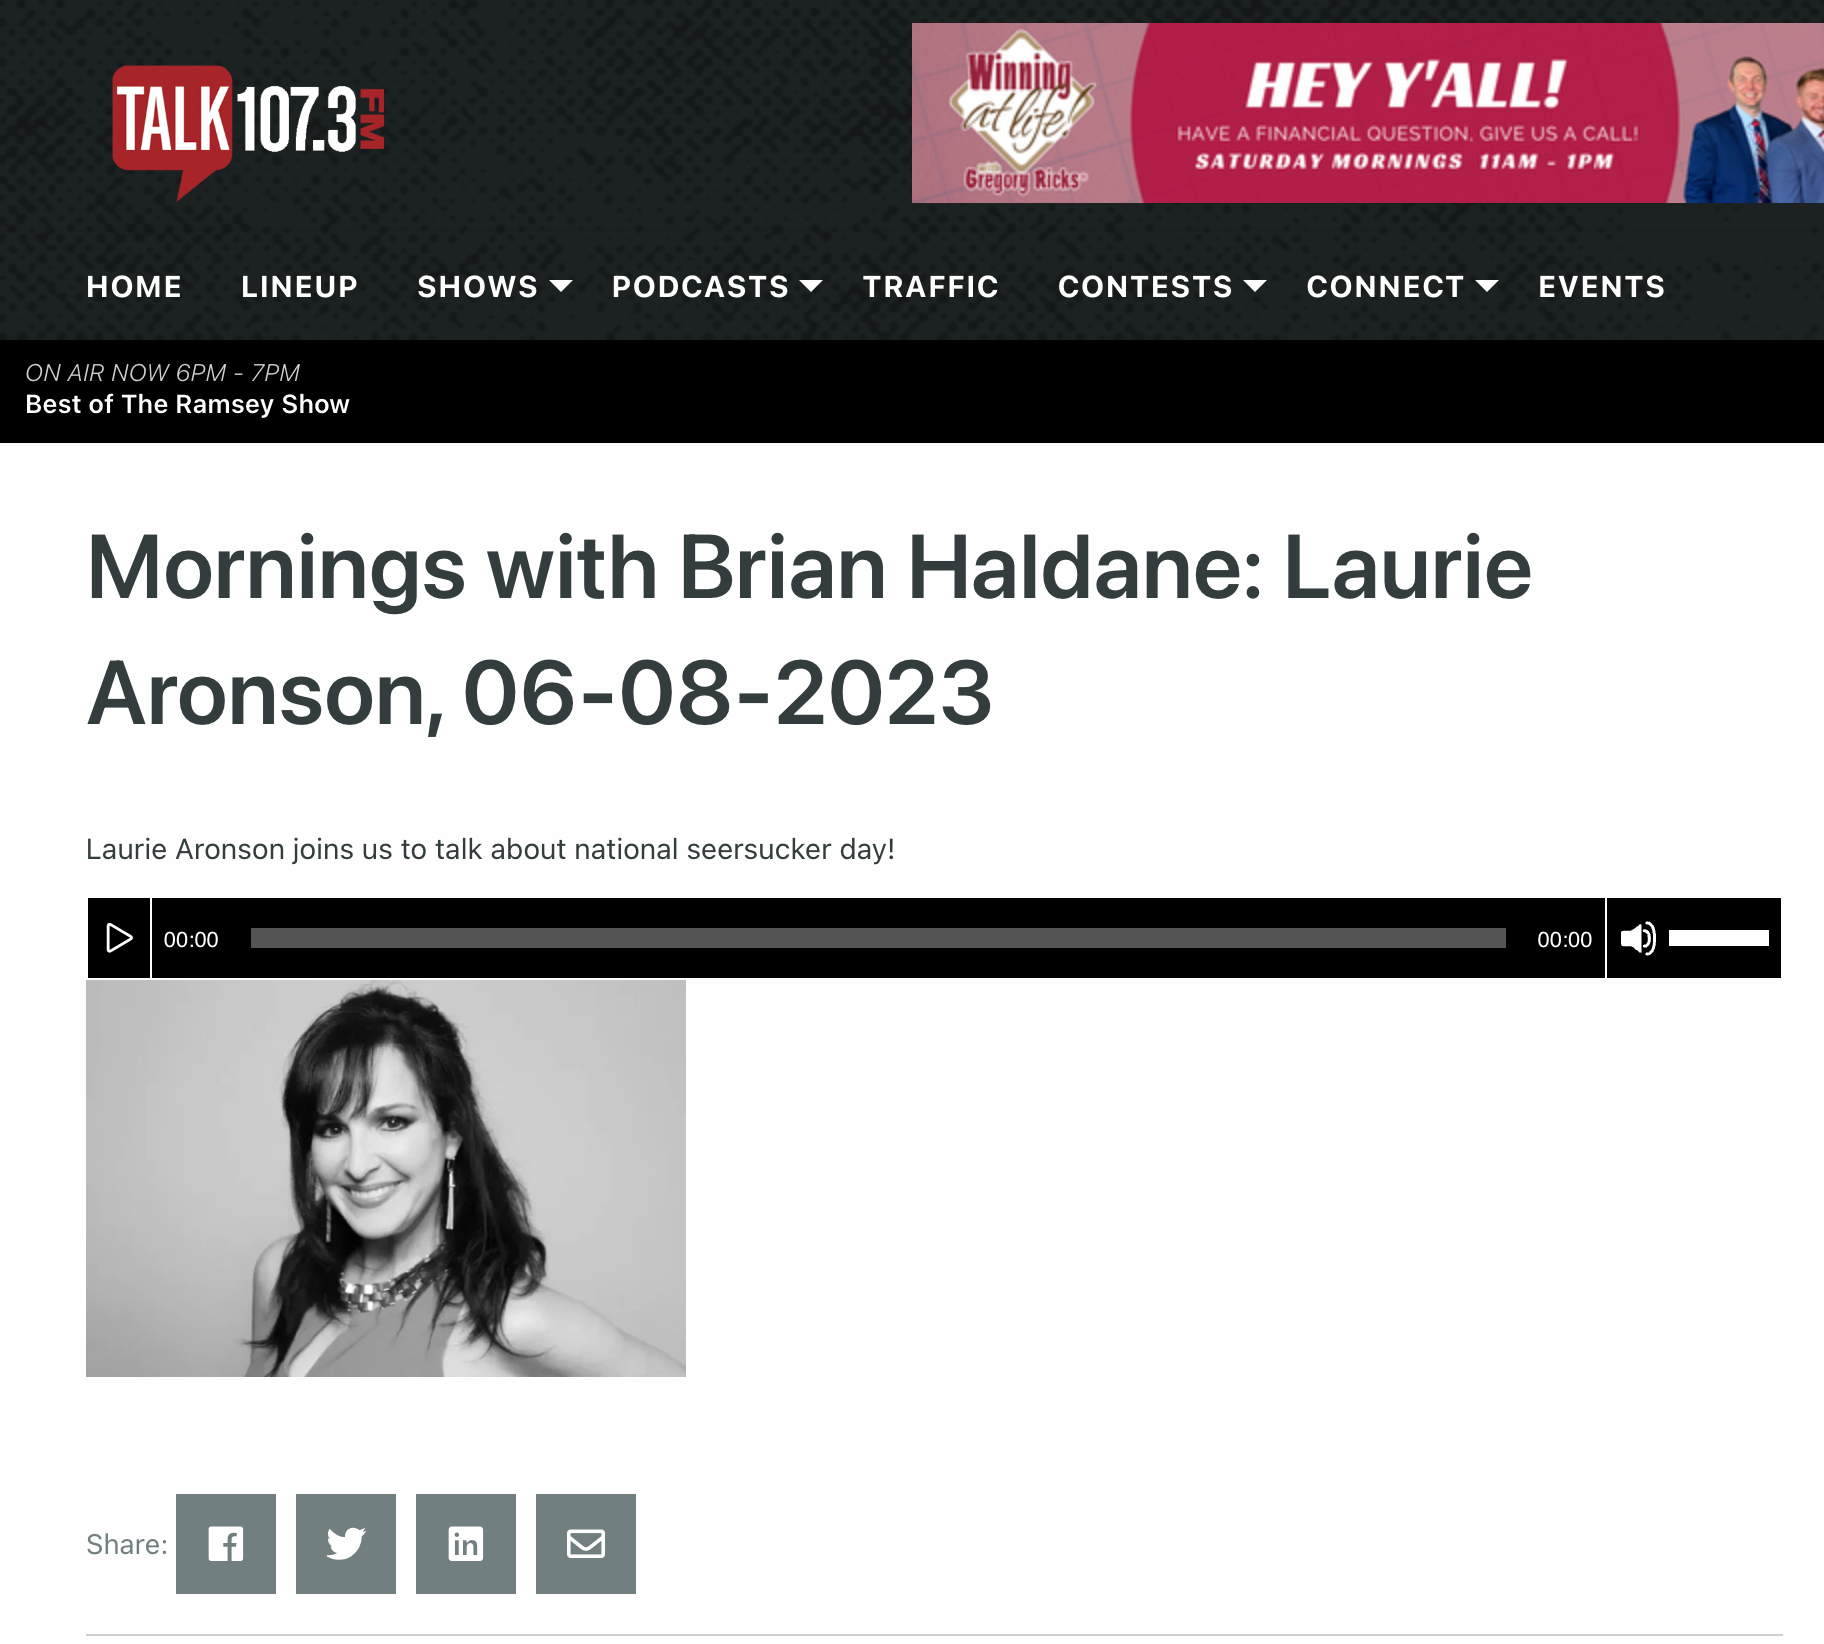 TALK 107.3FM - Mornings with Brian Haldane: Laurie Aronson, 06-08-2023